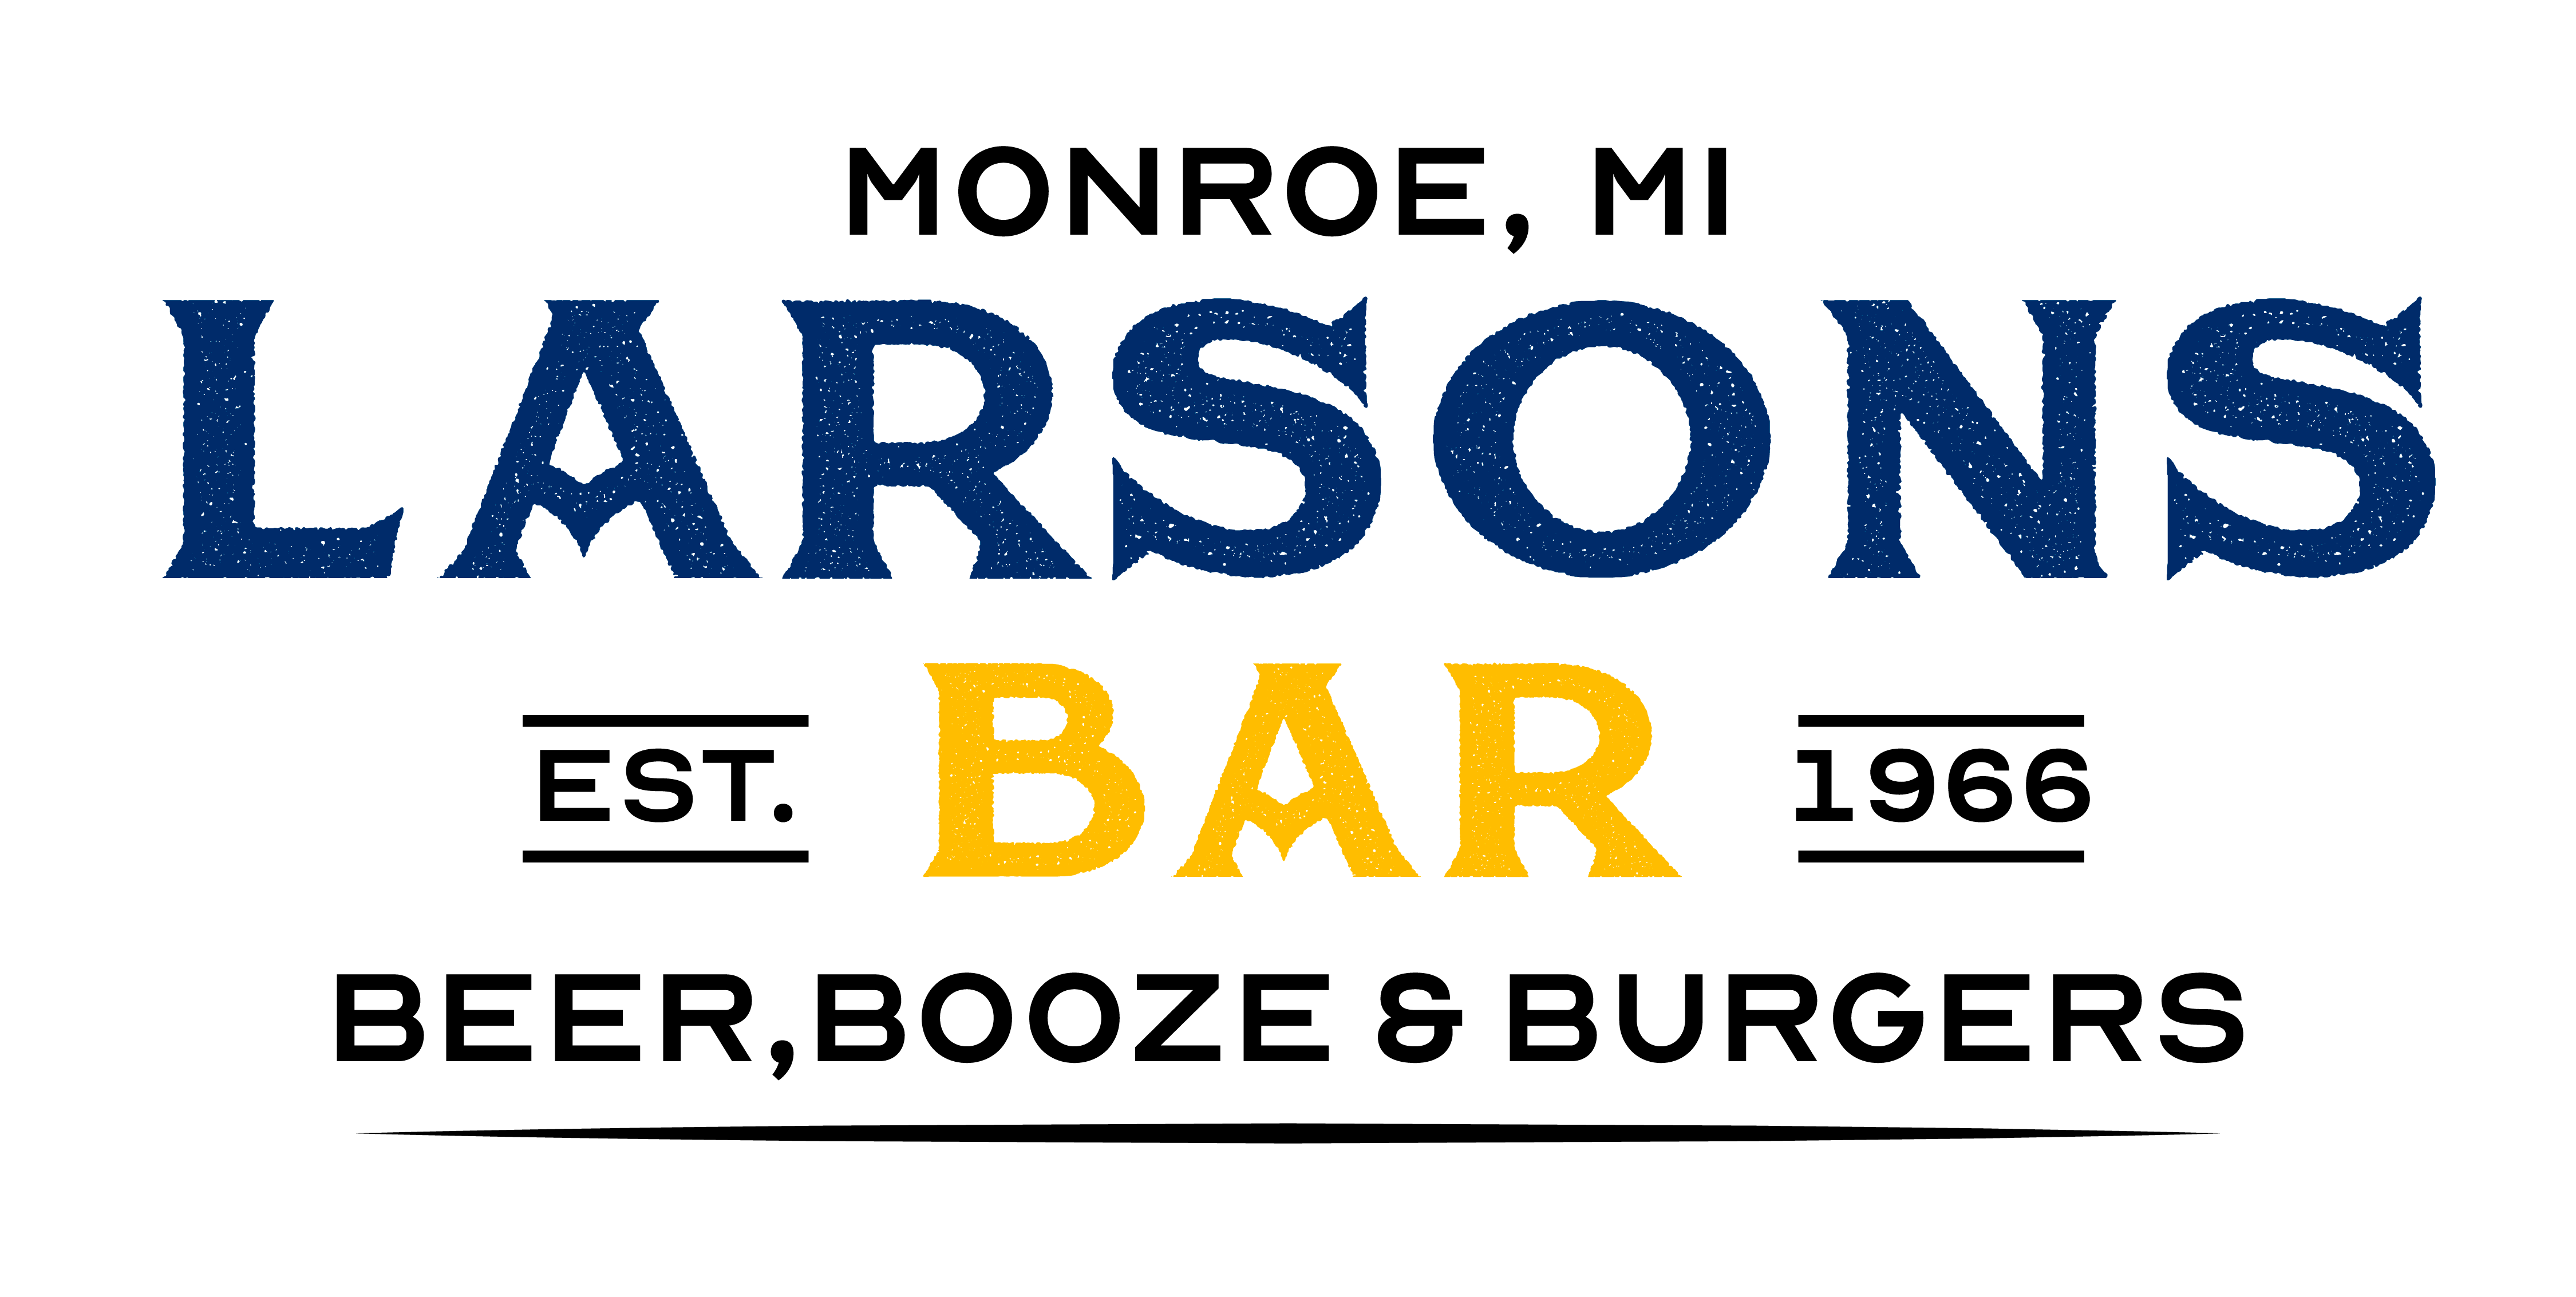 Larson bar logo est 1966